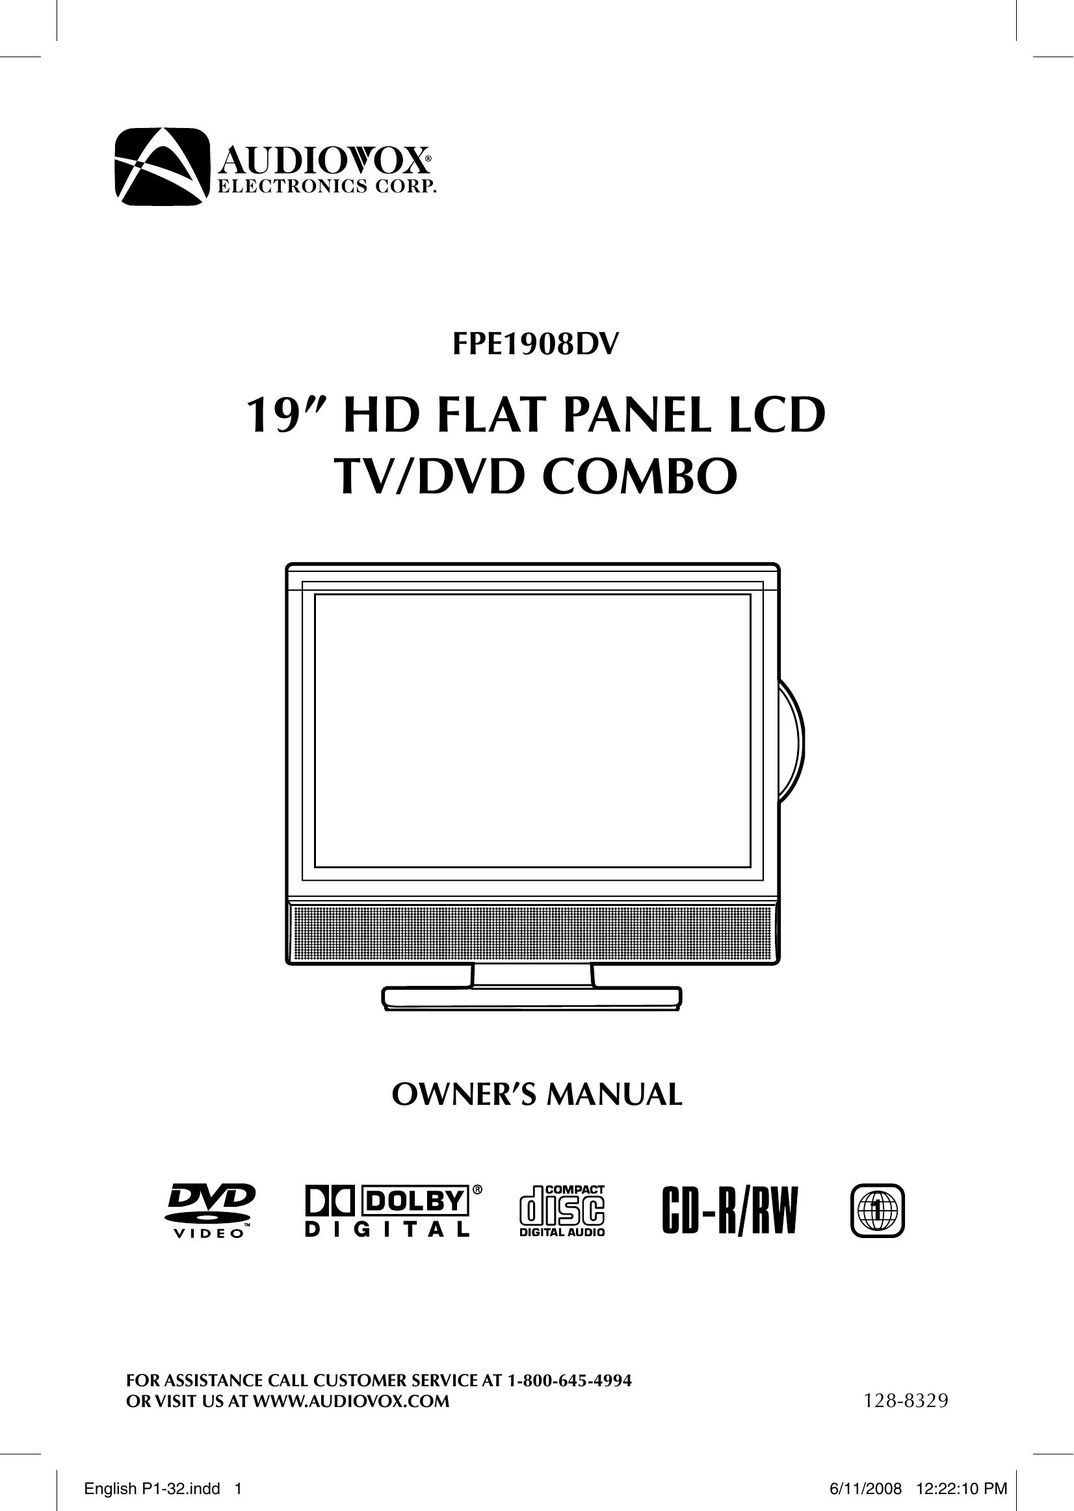 Audiovox FPE-1908DV Flat Panel Television User Manual